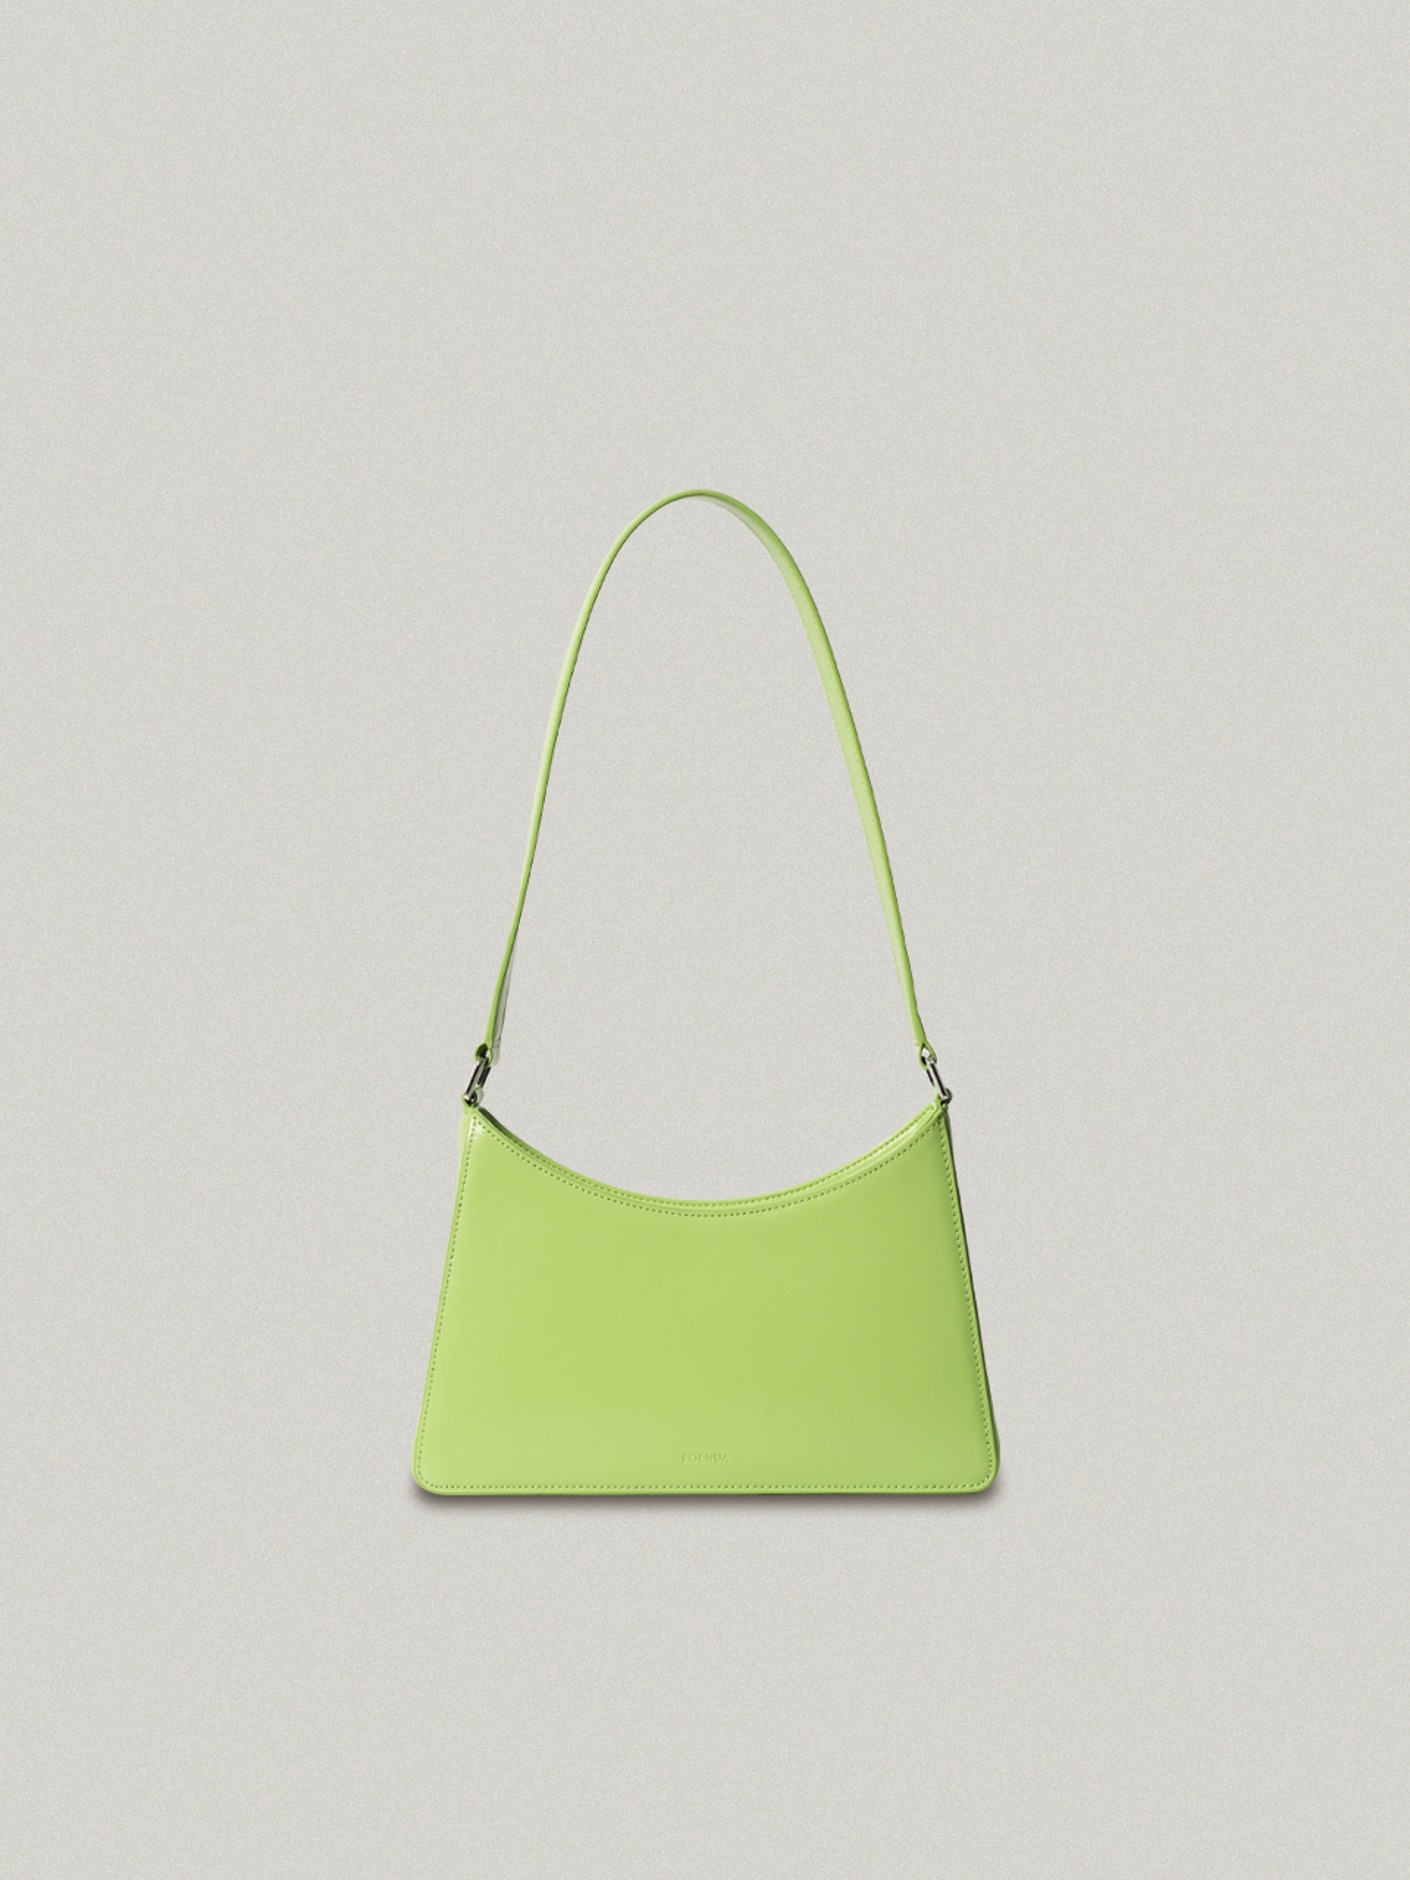 [LIMITED] Arc bag Lime - Crinkle아크백 - 크링클